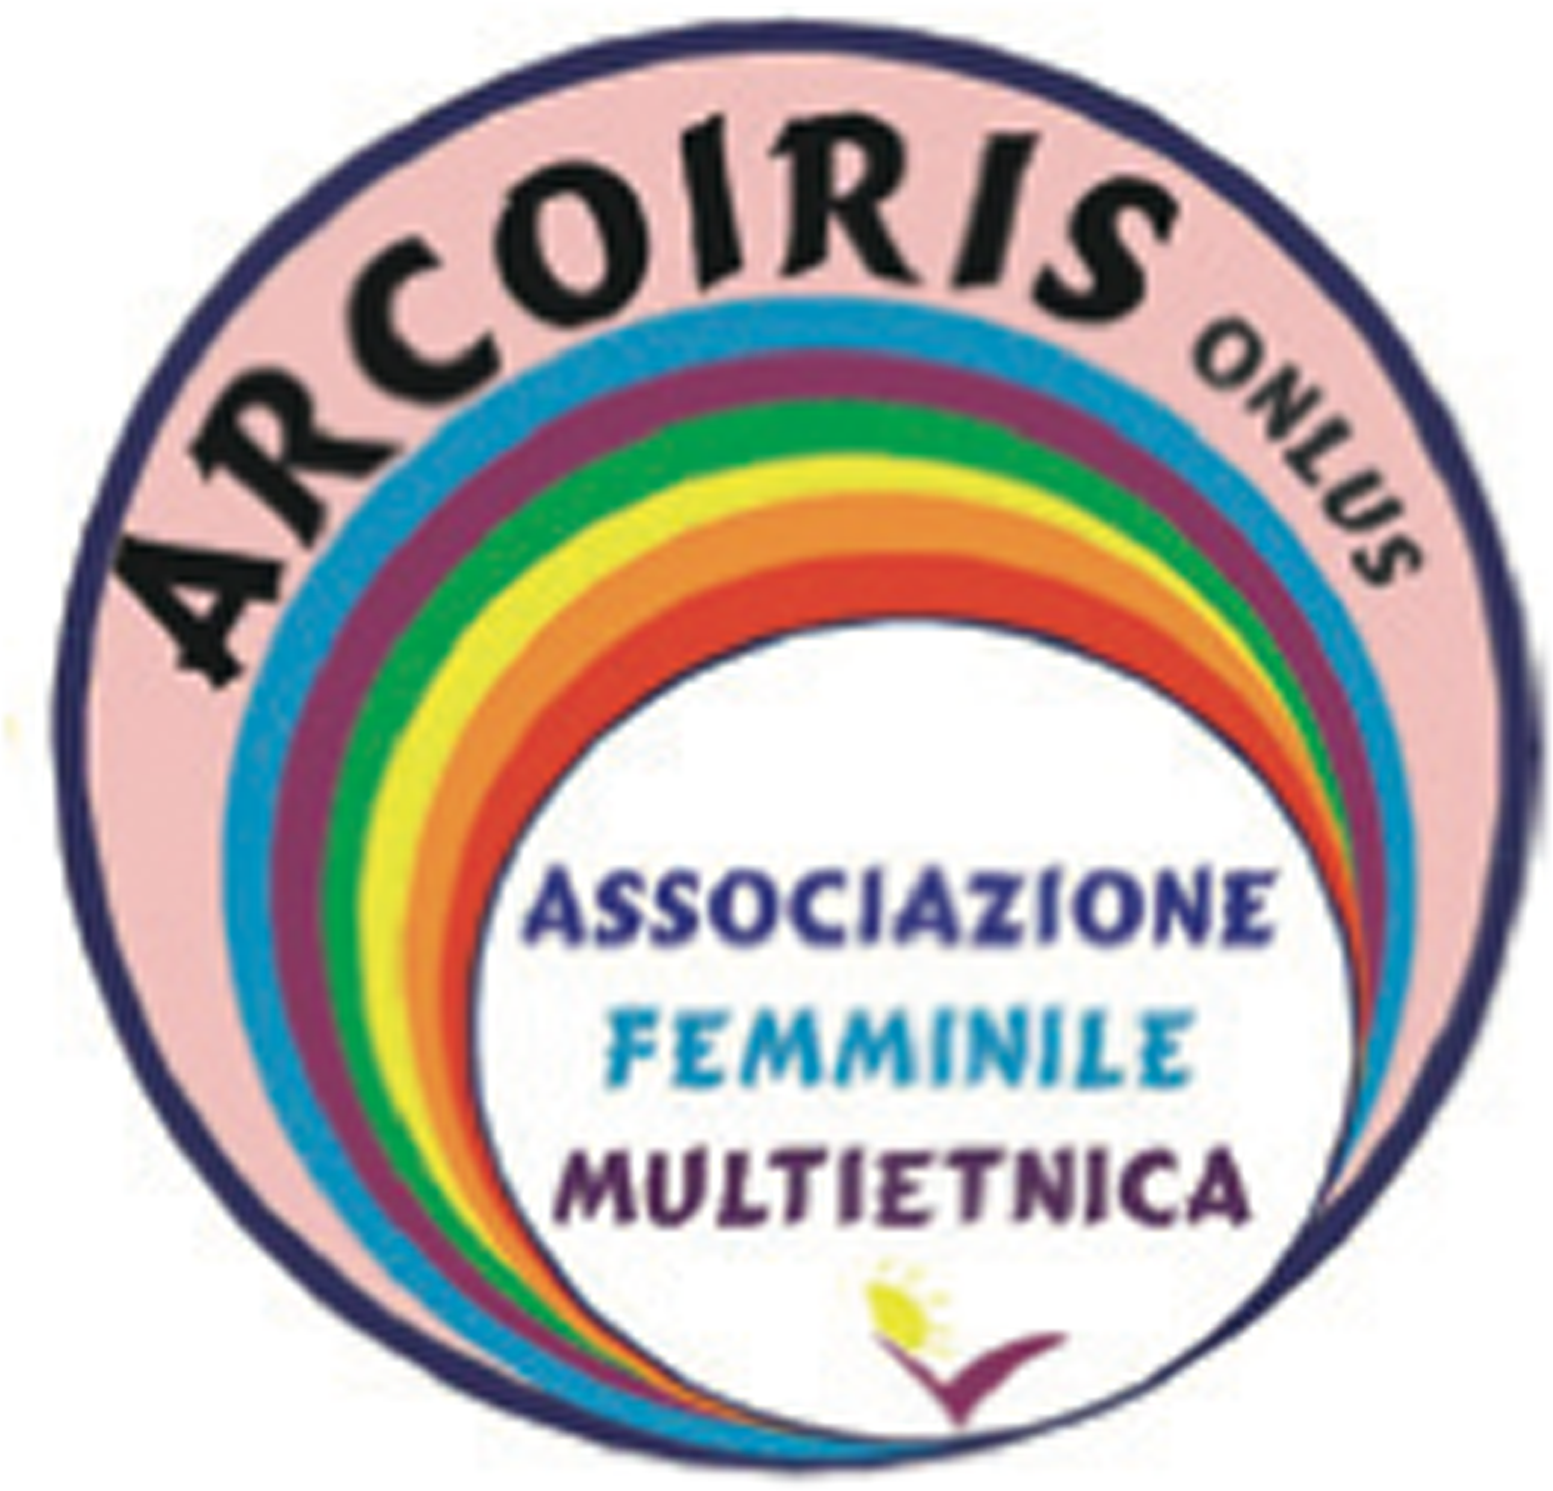 Logo Arcoiris Onlus